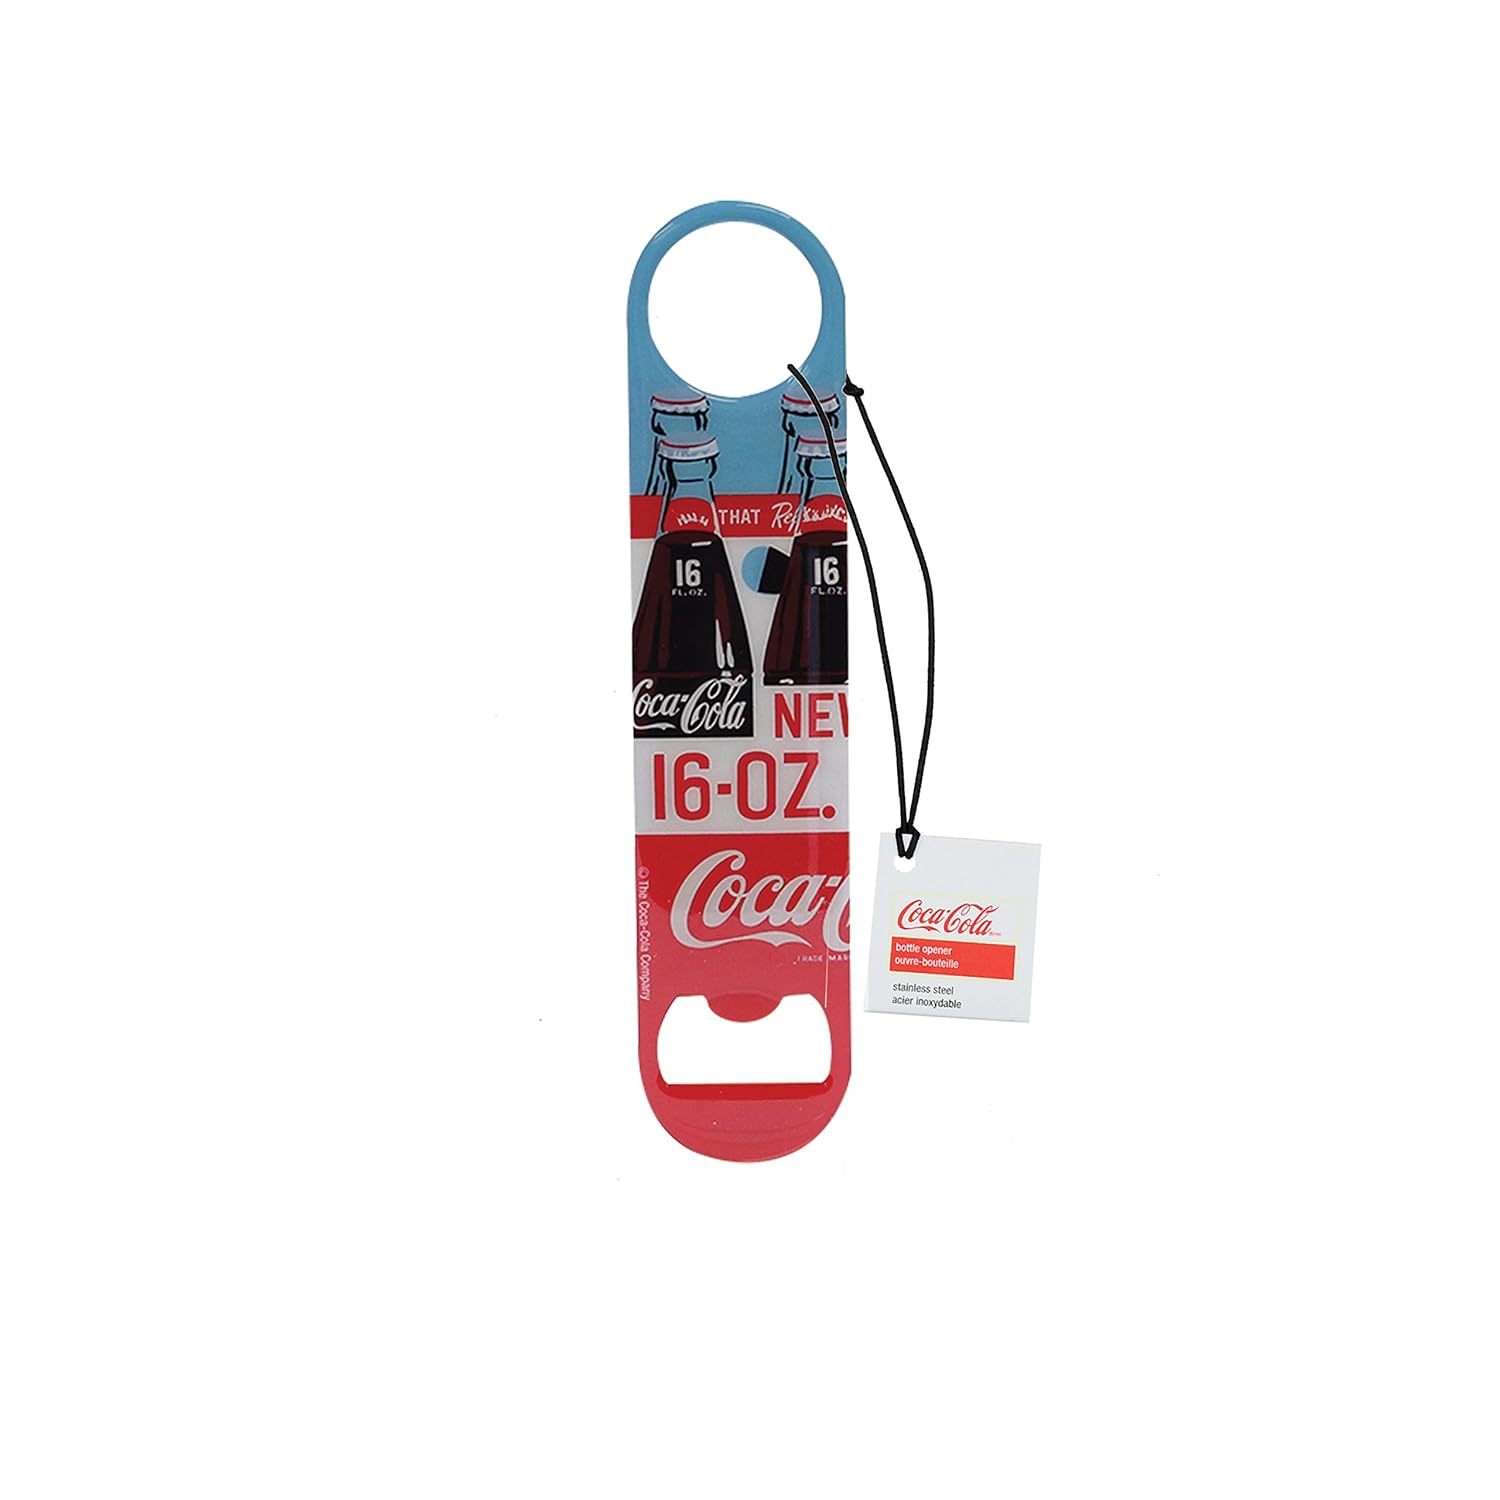 TableCraft's Coca-Cola Flat Metal Bottle Opener, Graphic, Red - $33.99